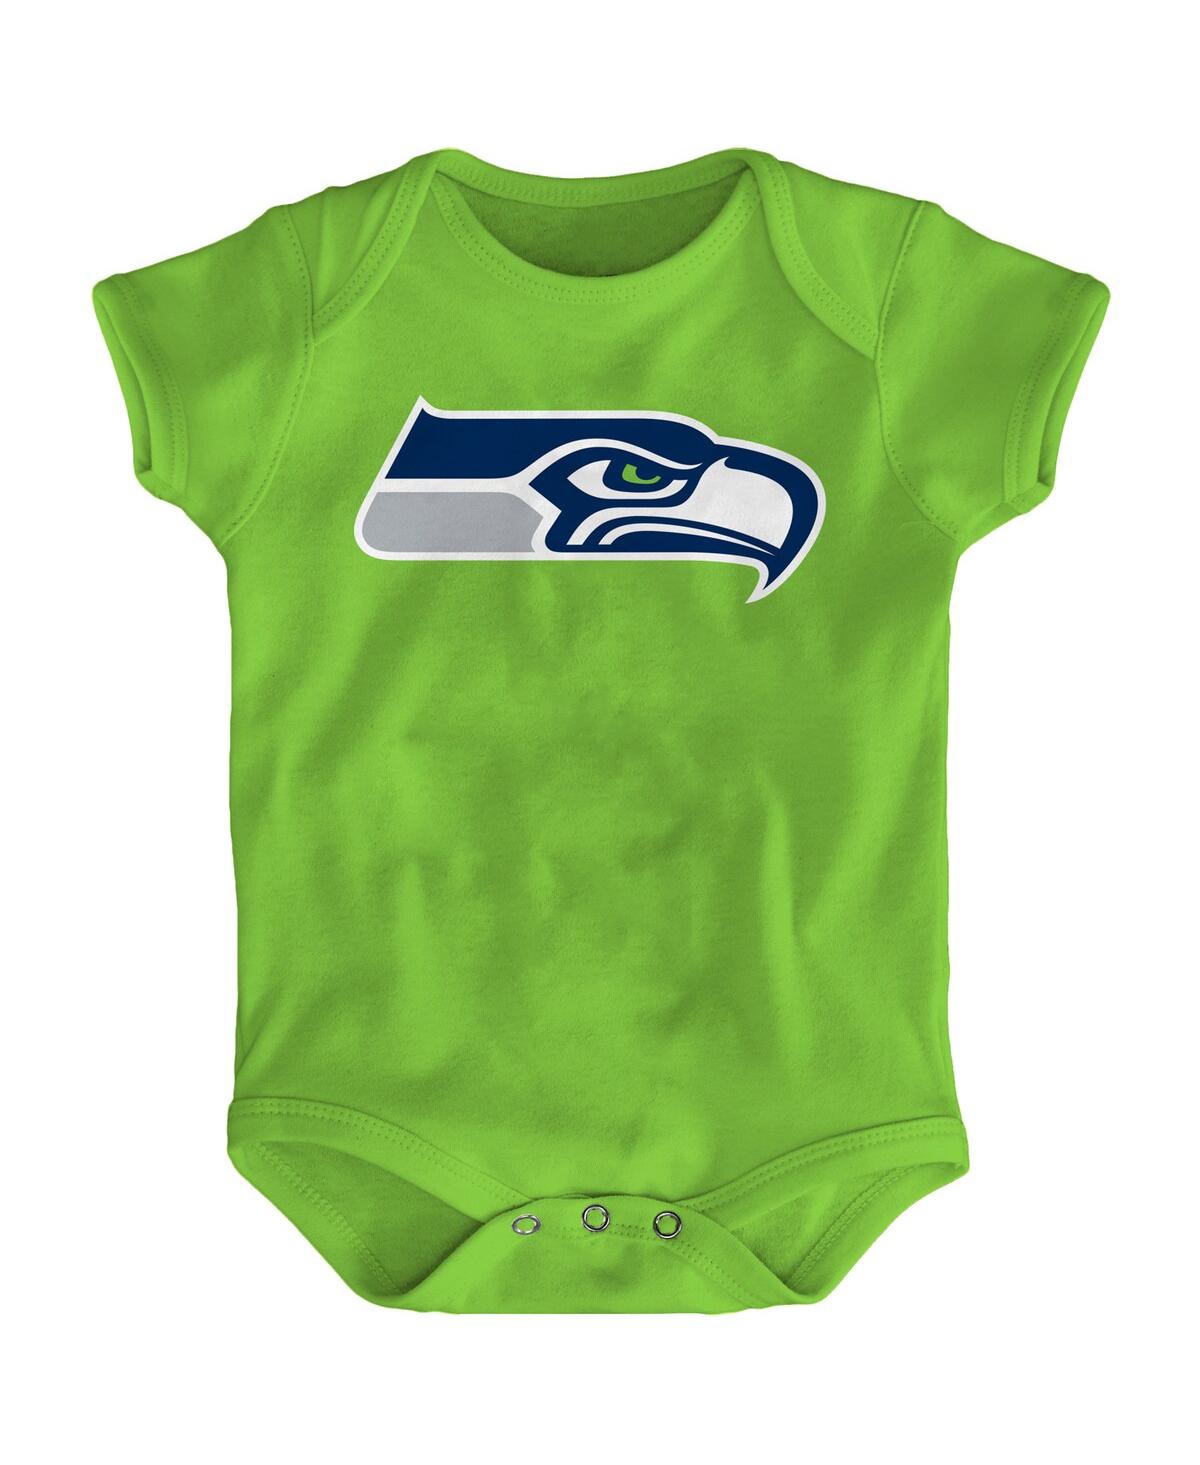 Outerstuff Babies' Newborn Boys And Girls Neon Green Seattle Seahawks Team Logo Bodysuit